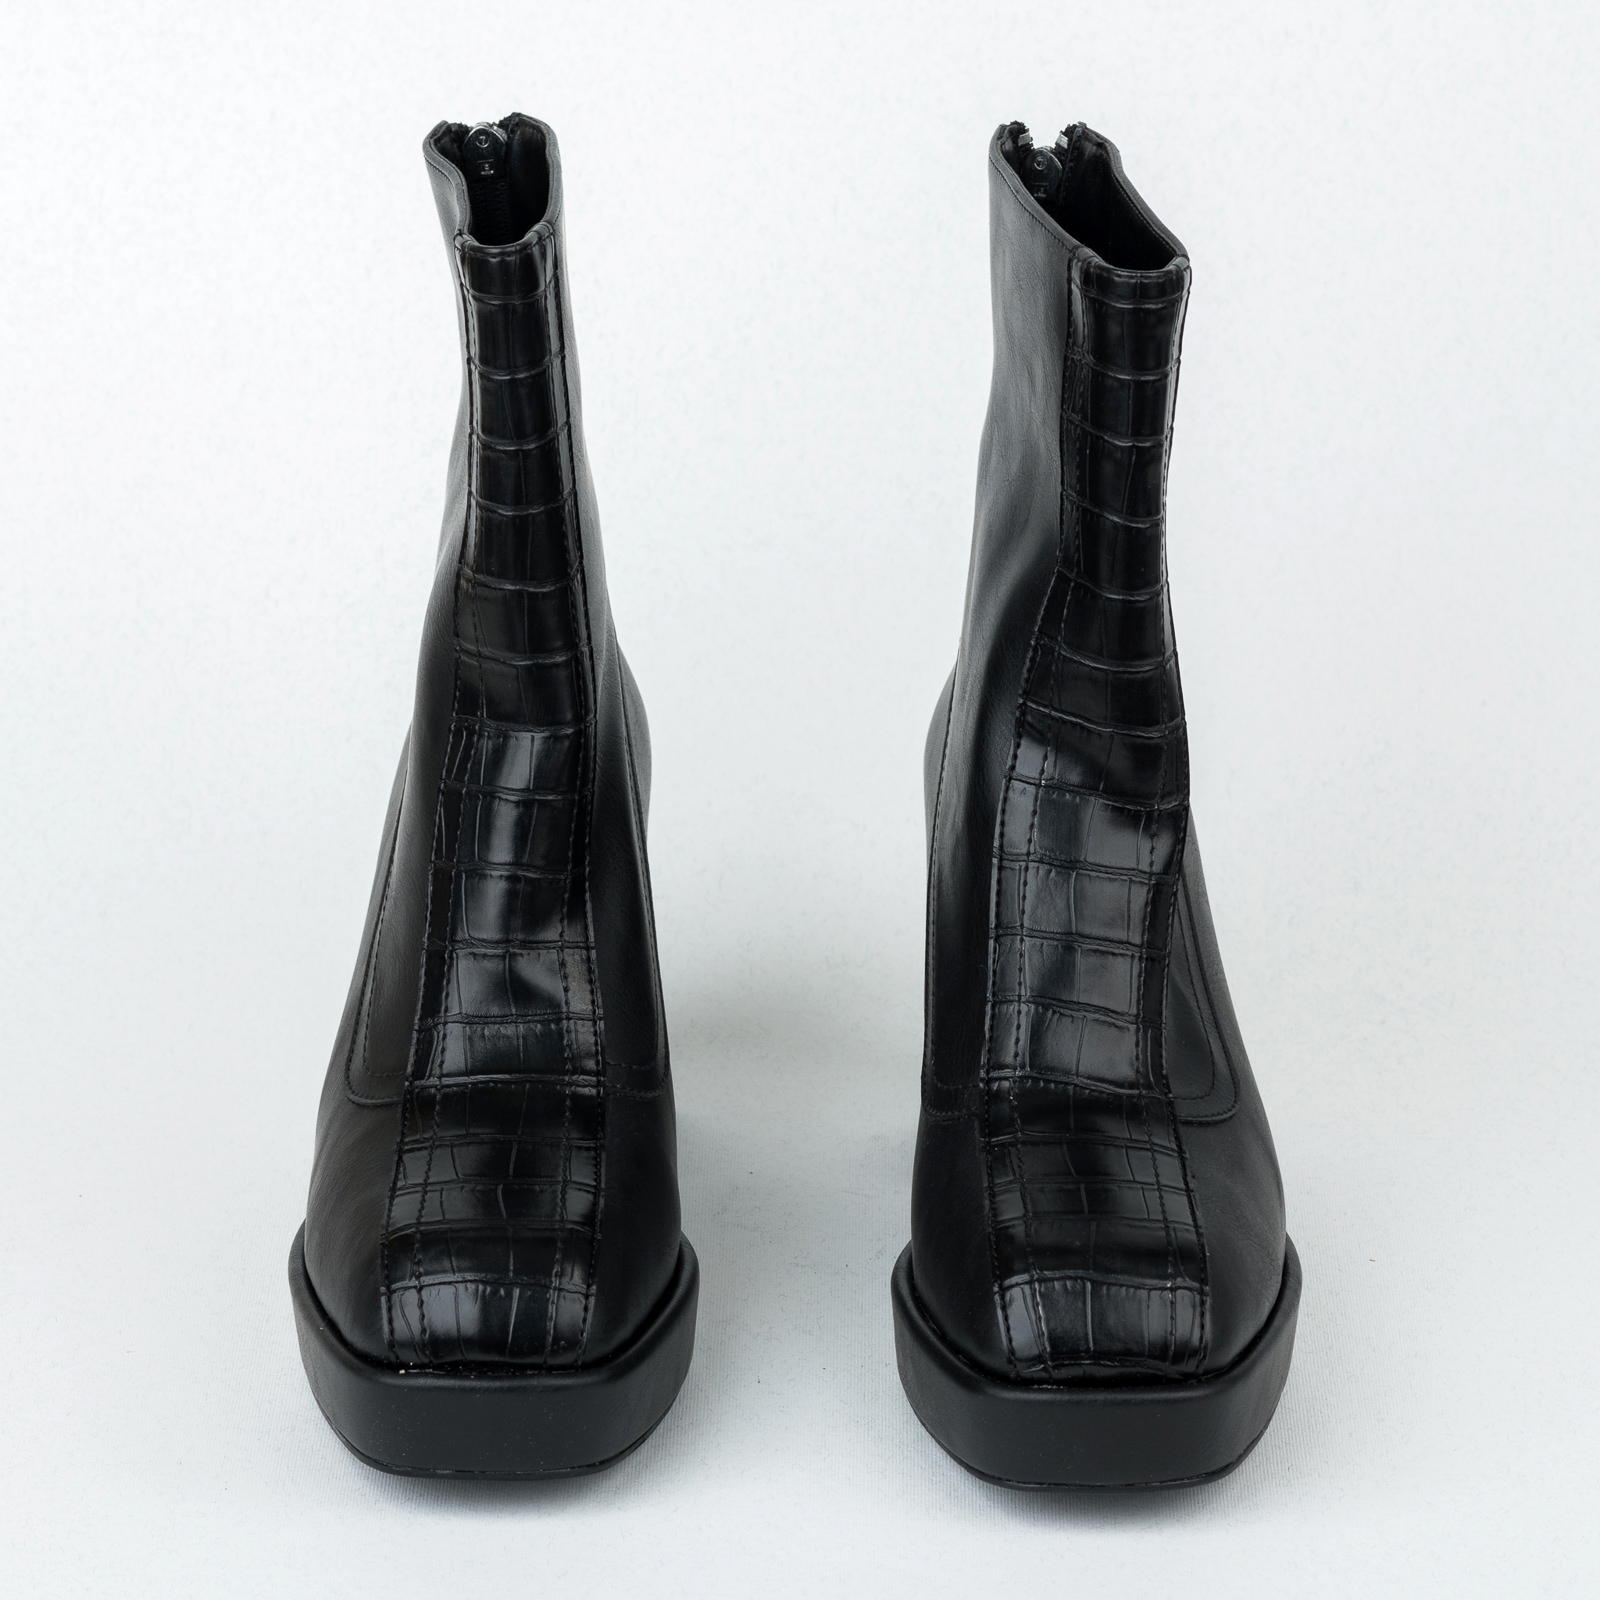 Women ankle boots B552 - BLACK